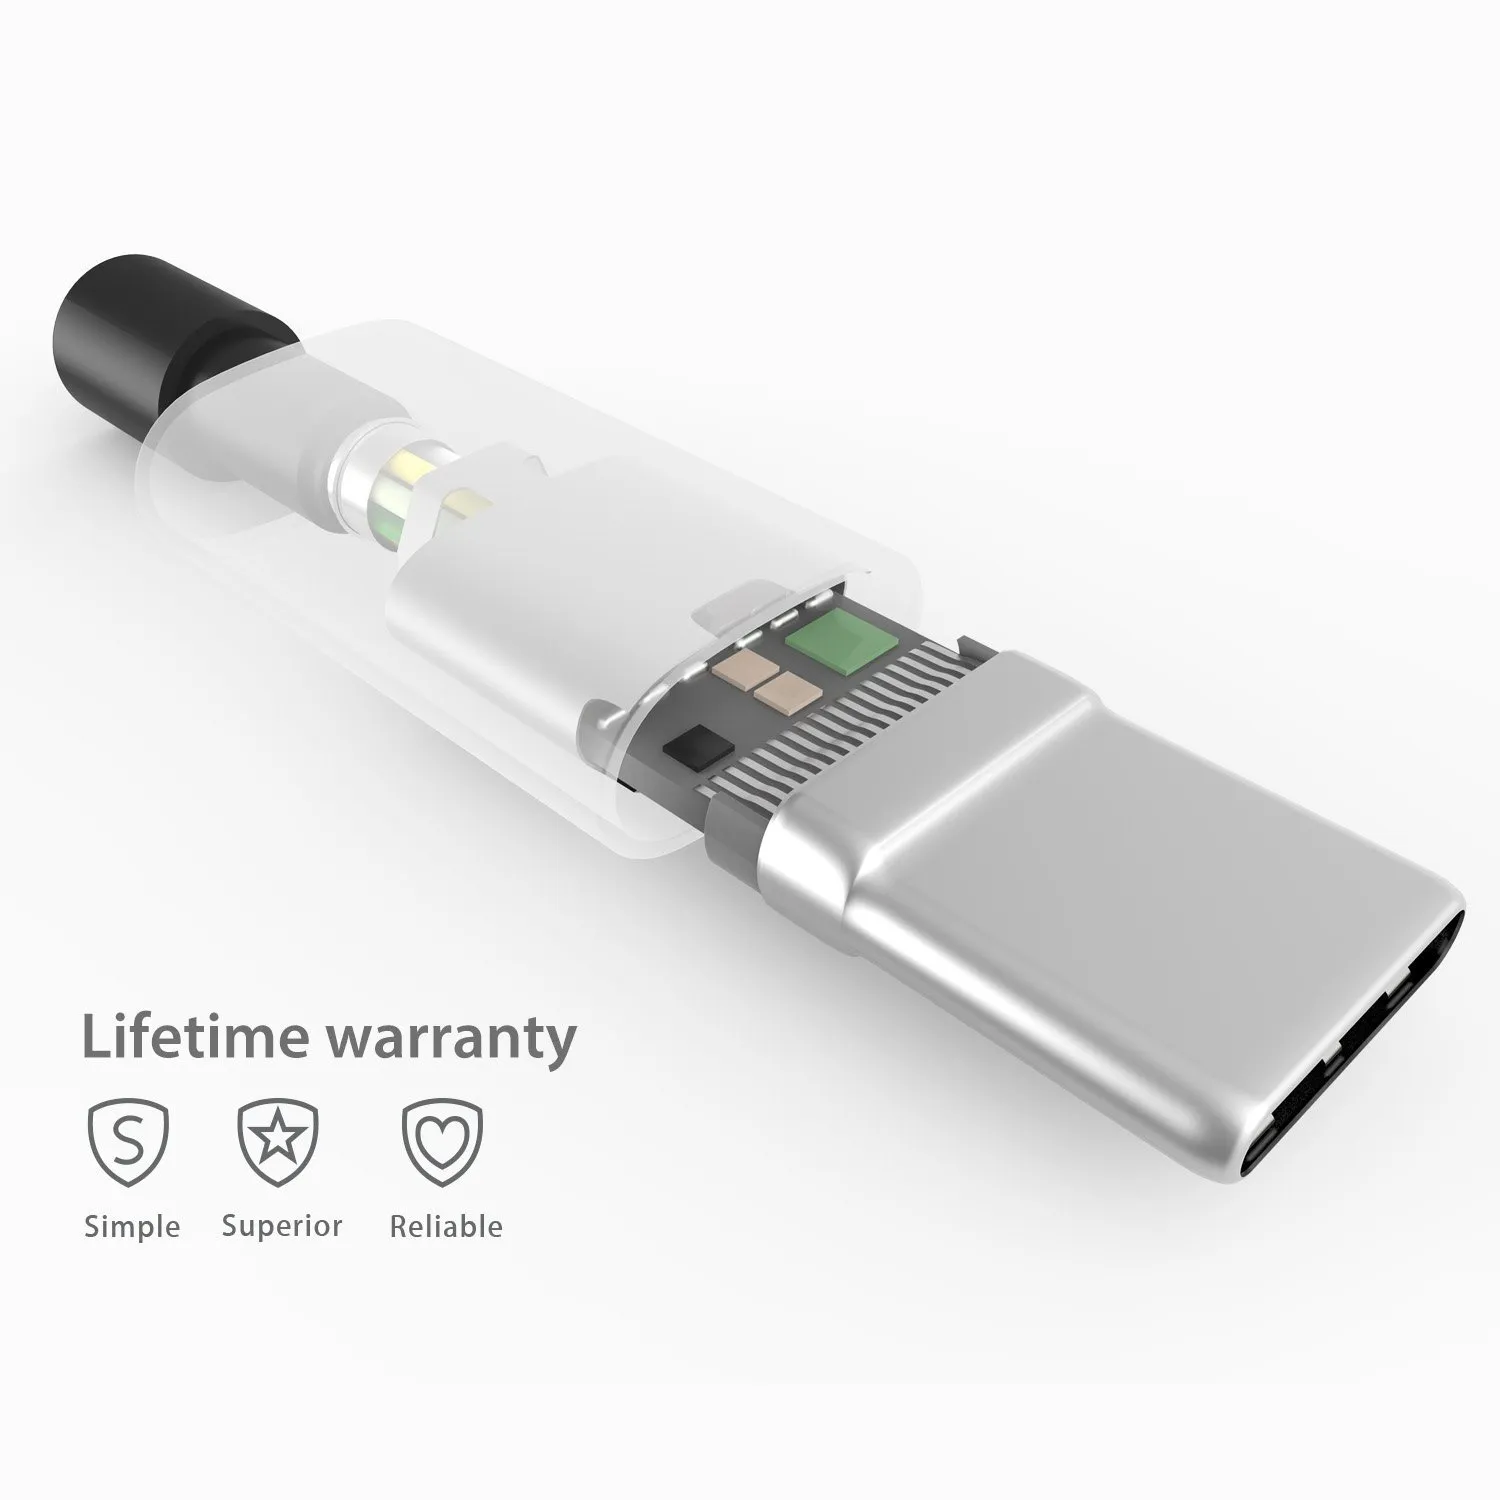 USB-кабель типа C Быстрое зарядное устройство с нейлоновым шнуром с двусторонним разъемом для USB-устройств типа C FCC CP65 CE ROHS